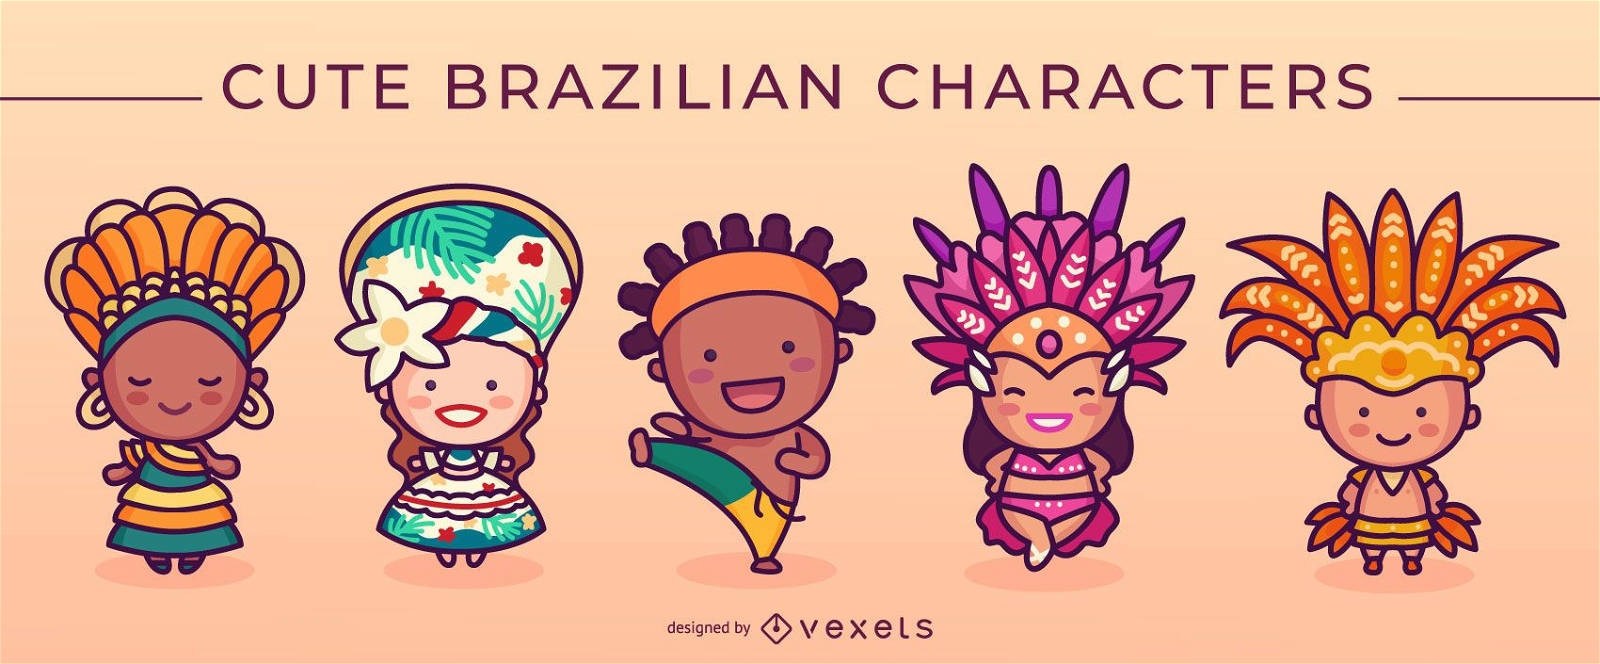 Lindo conjunto de personajes brasile?os